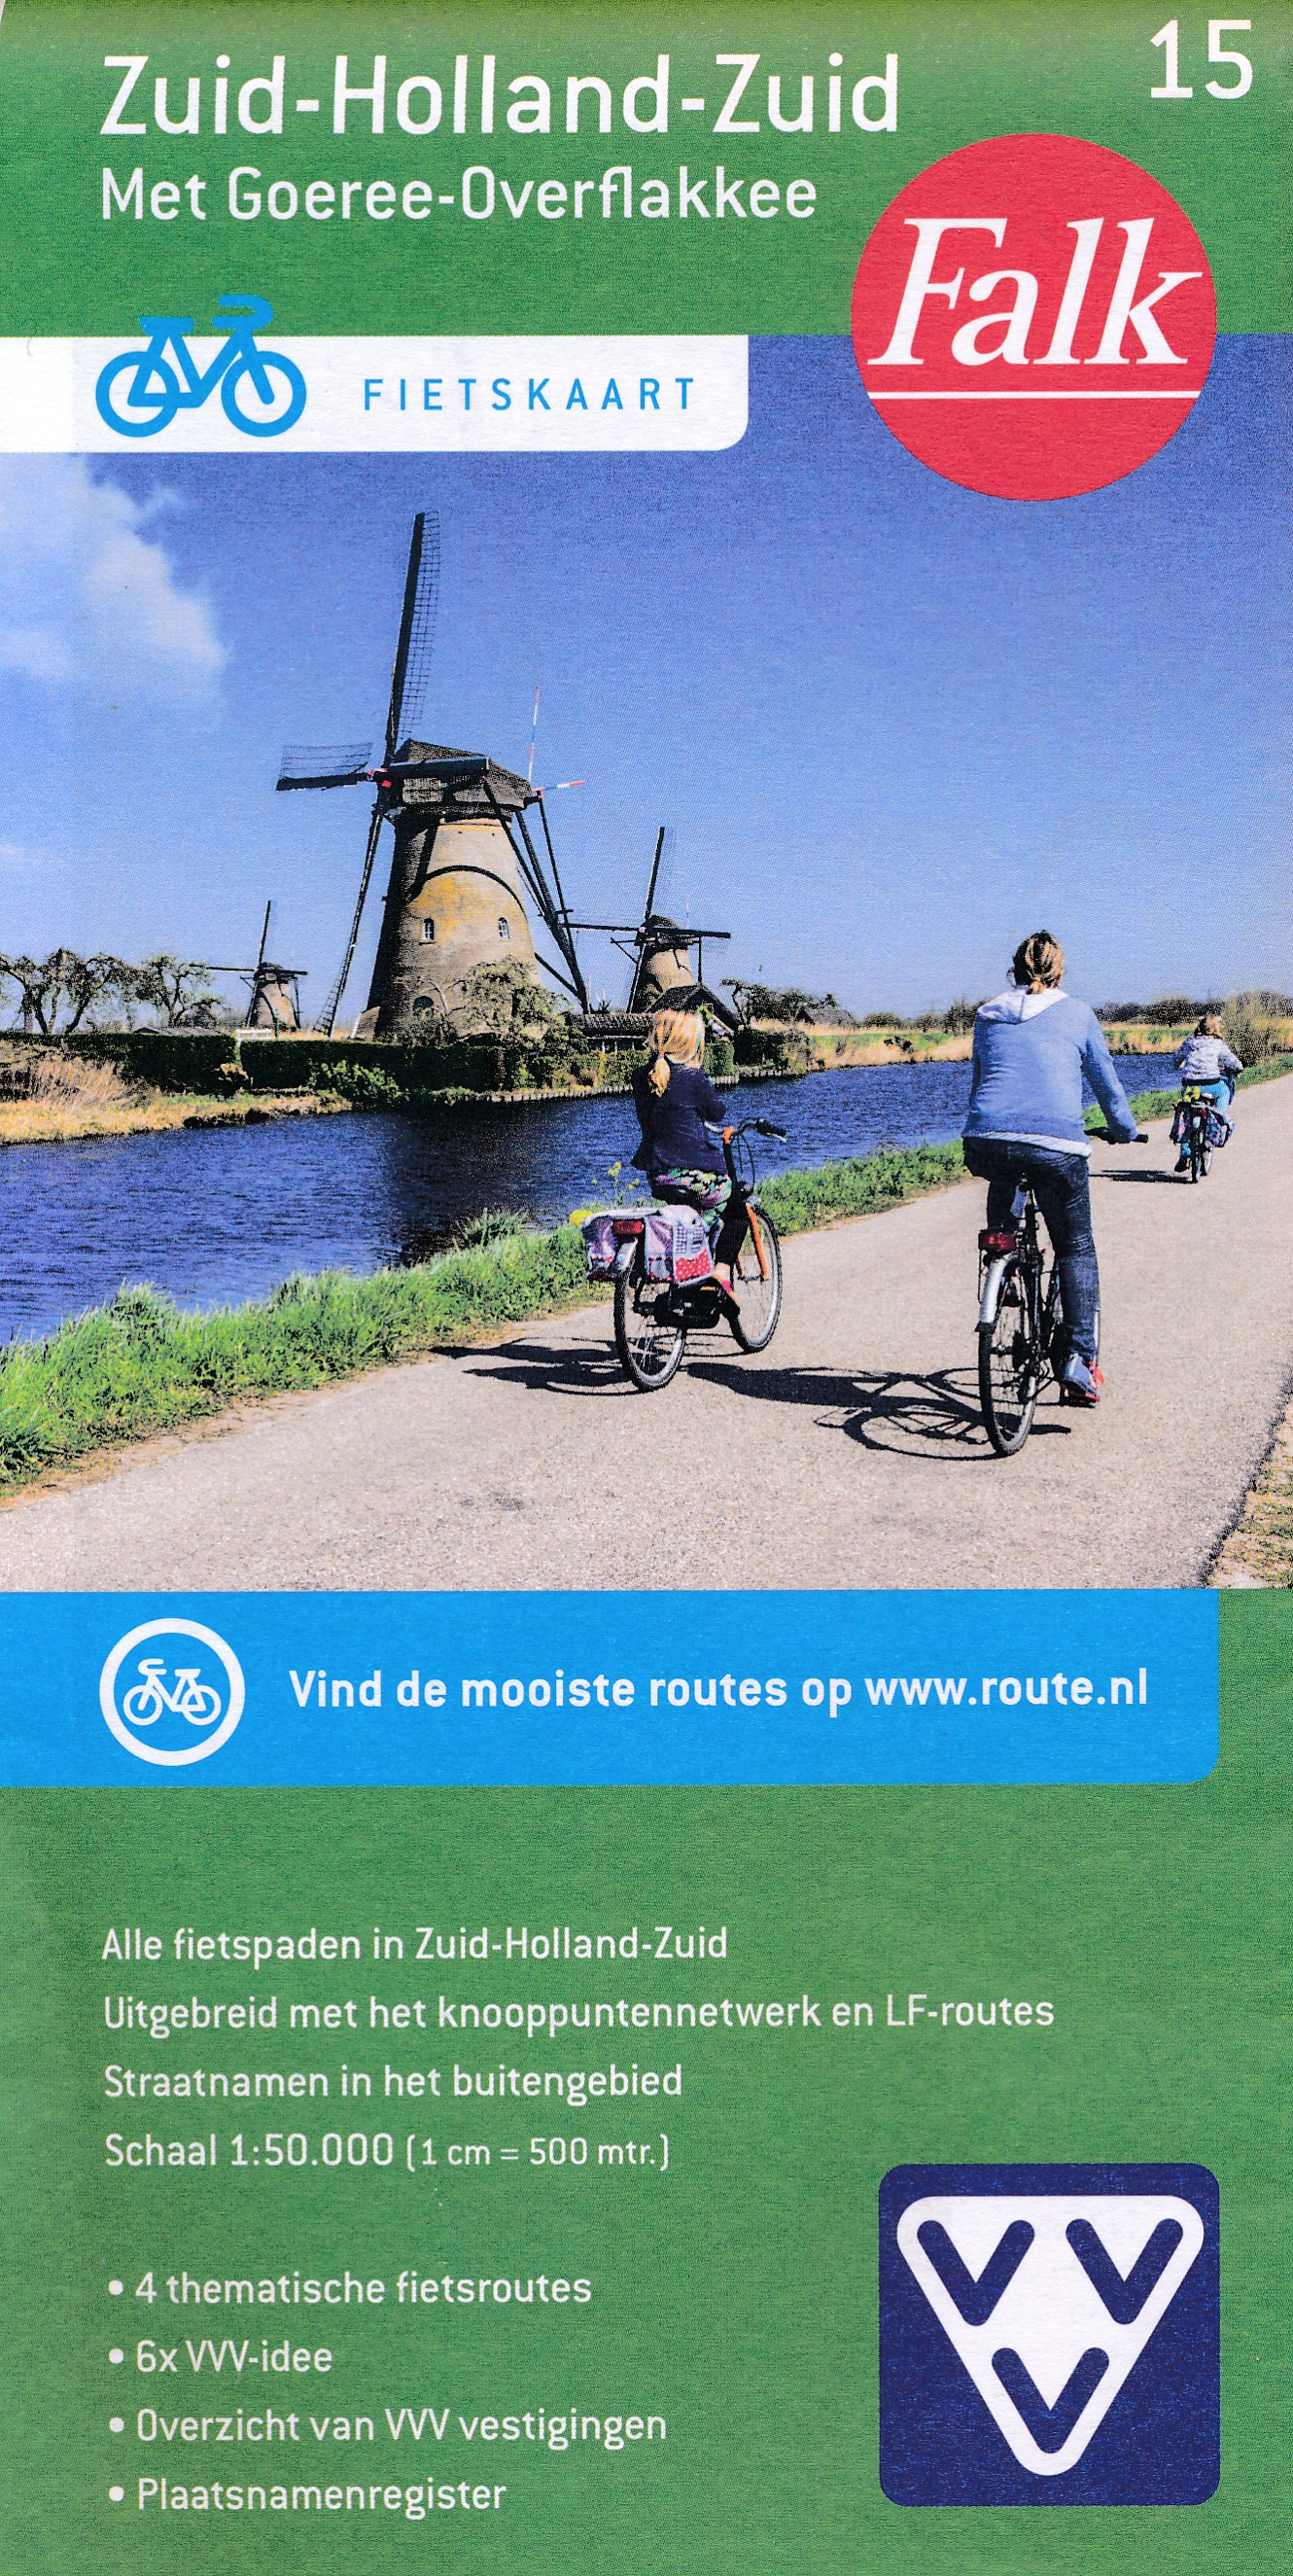 Online bestellen: Fietskaart 15 Zuid-Holland-Zuid met Goeree-Overflakkee | Falk